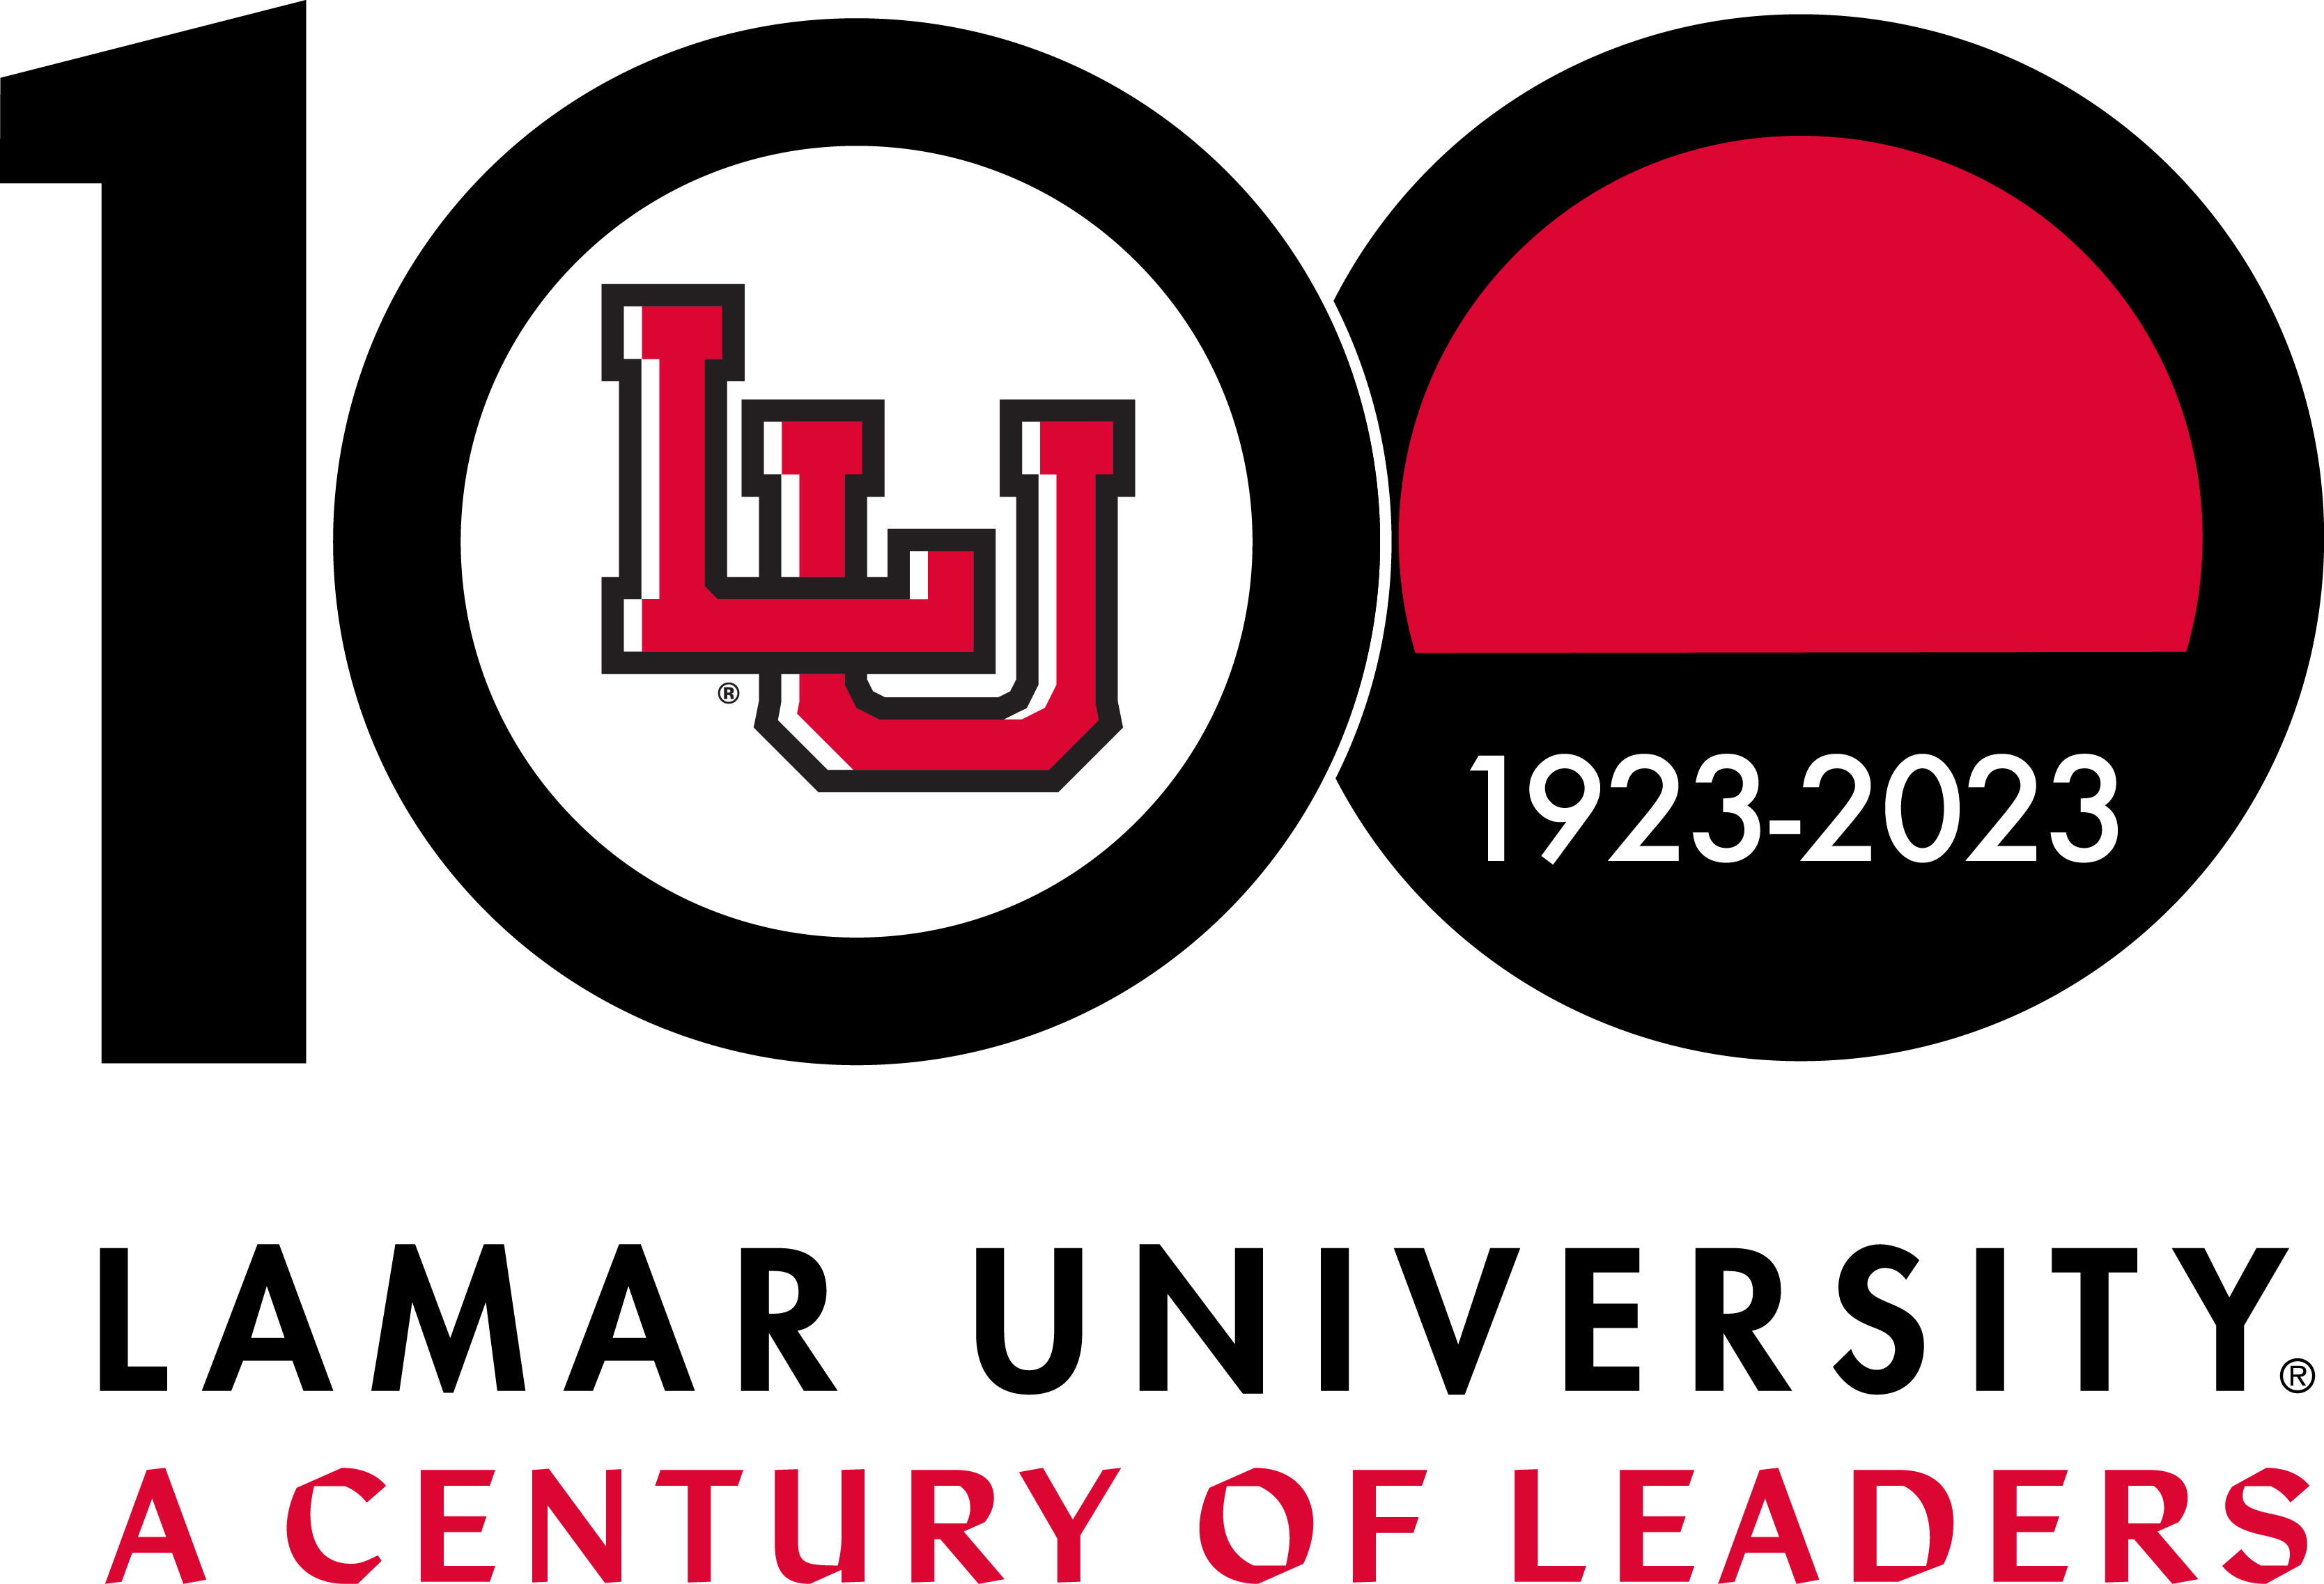 100, LU, 1923-2023, Lamar University A Century of Leaders